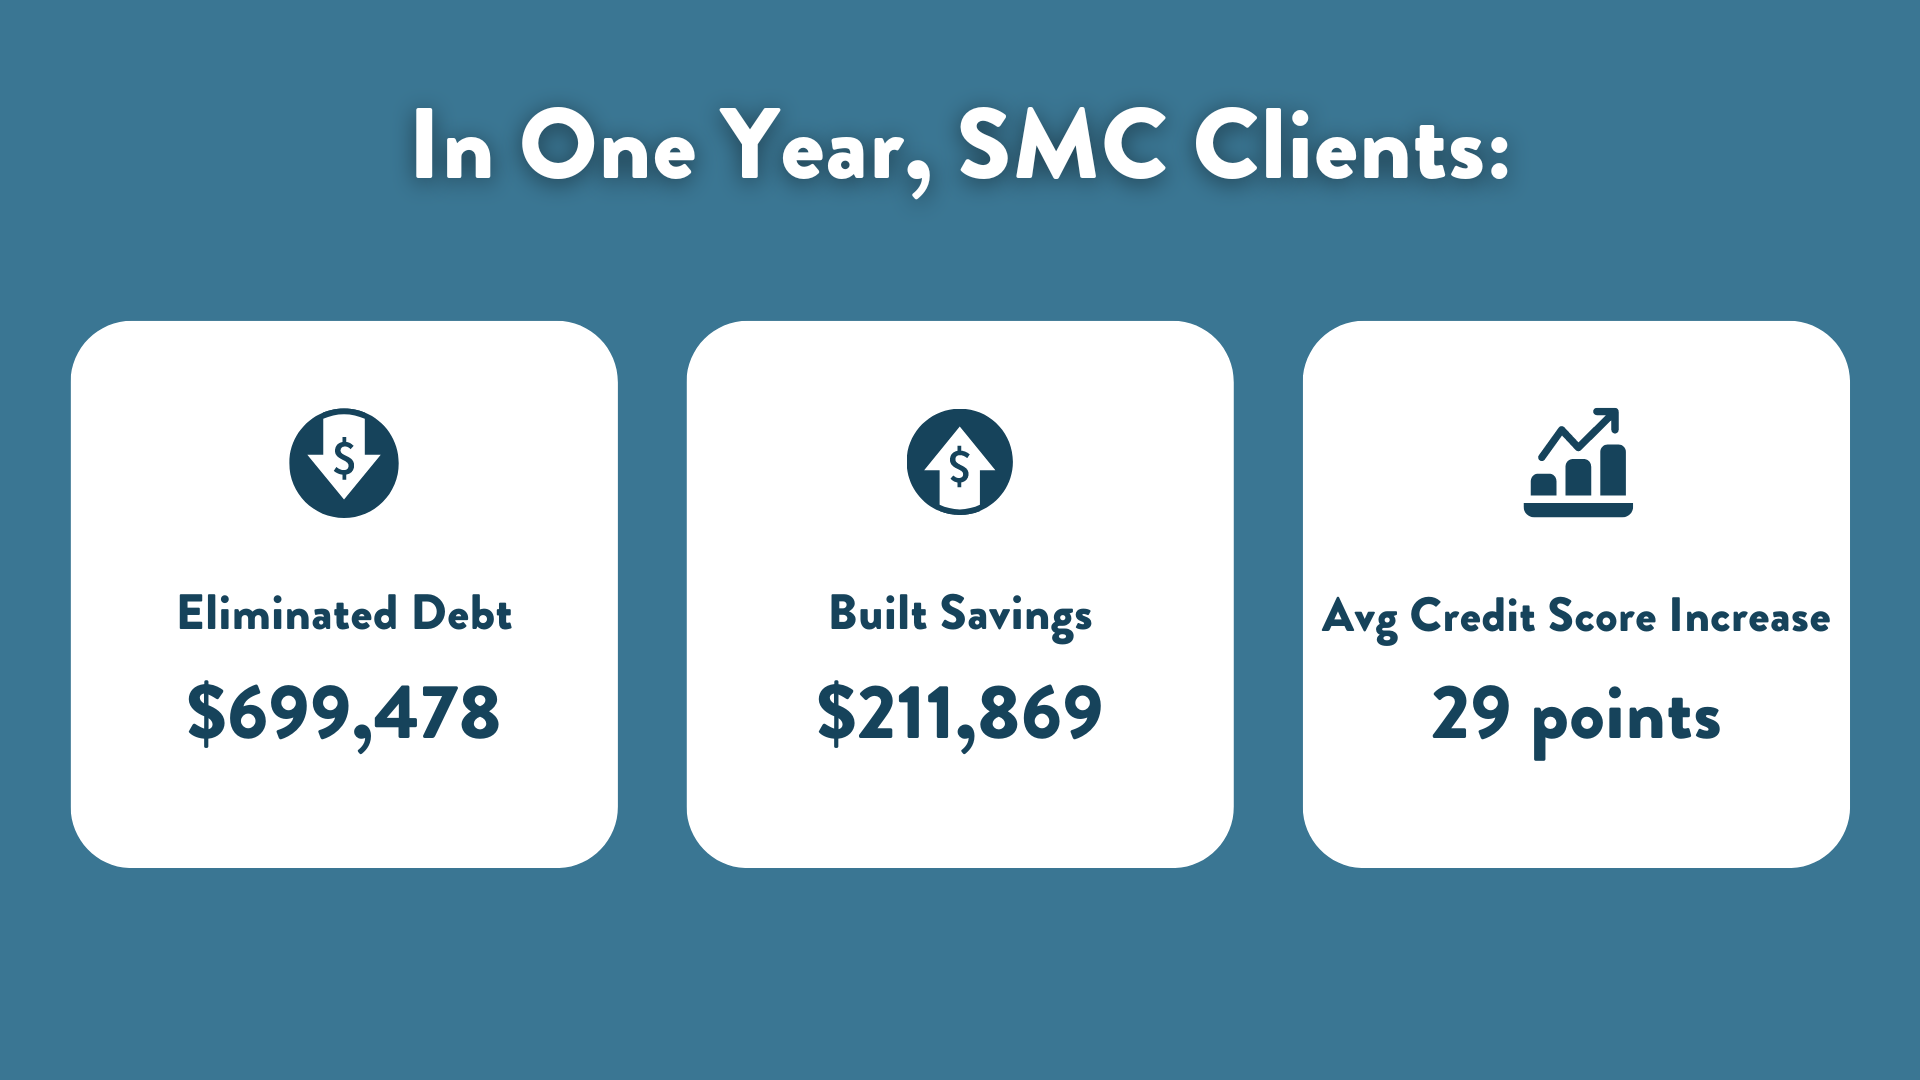 SMC Data Points